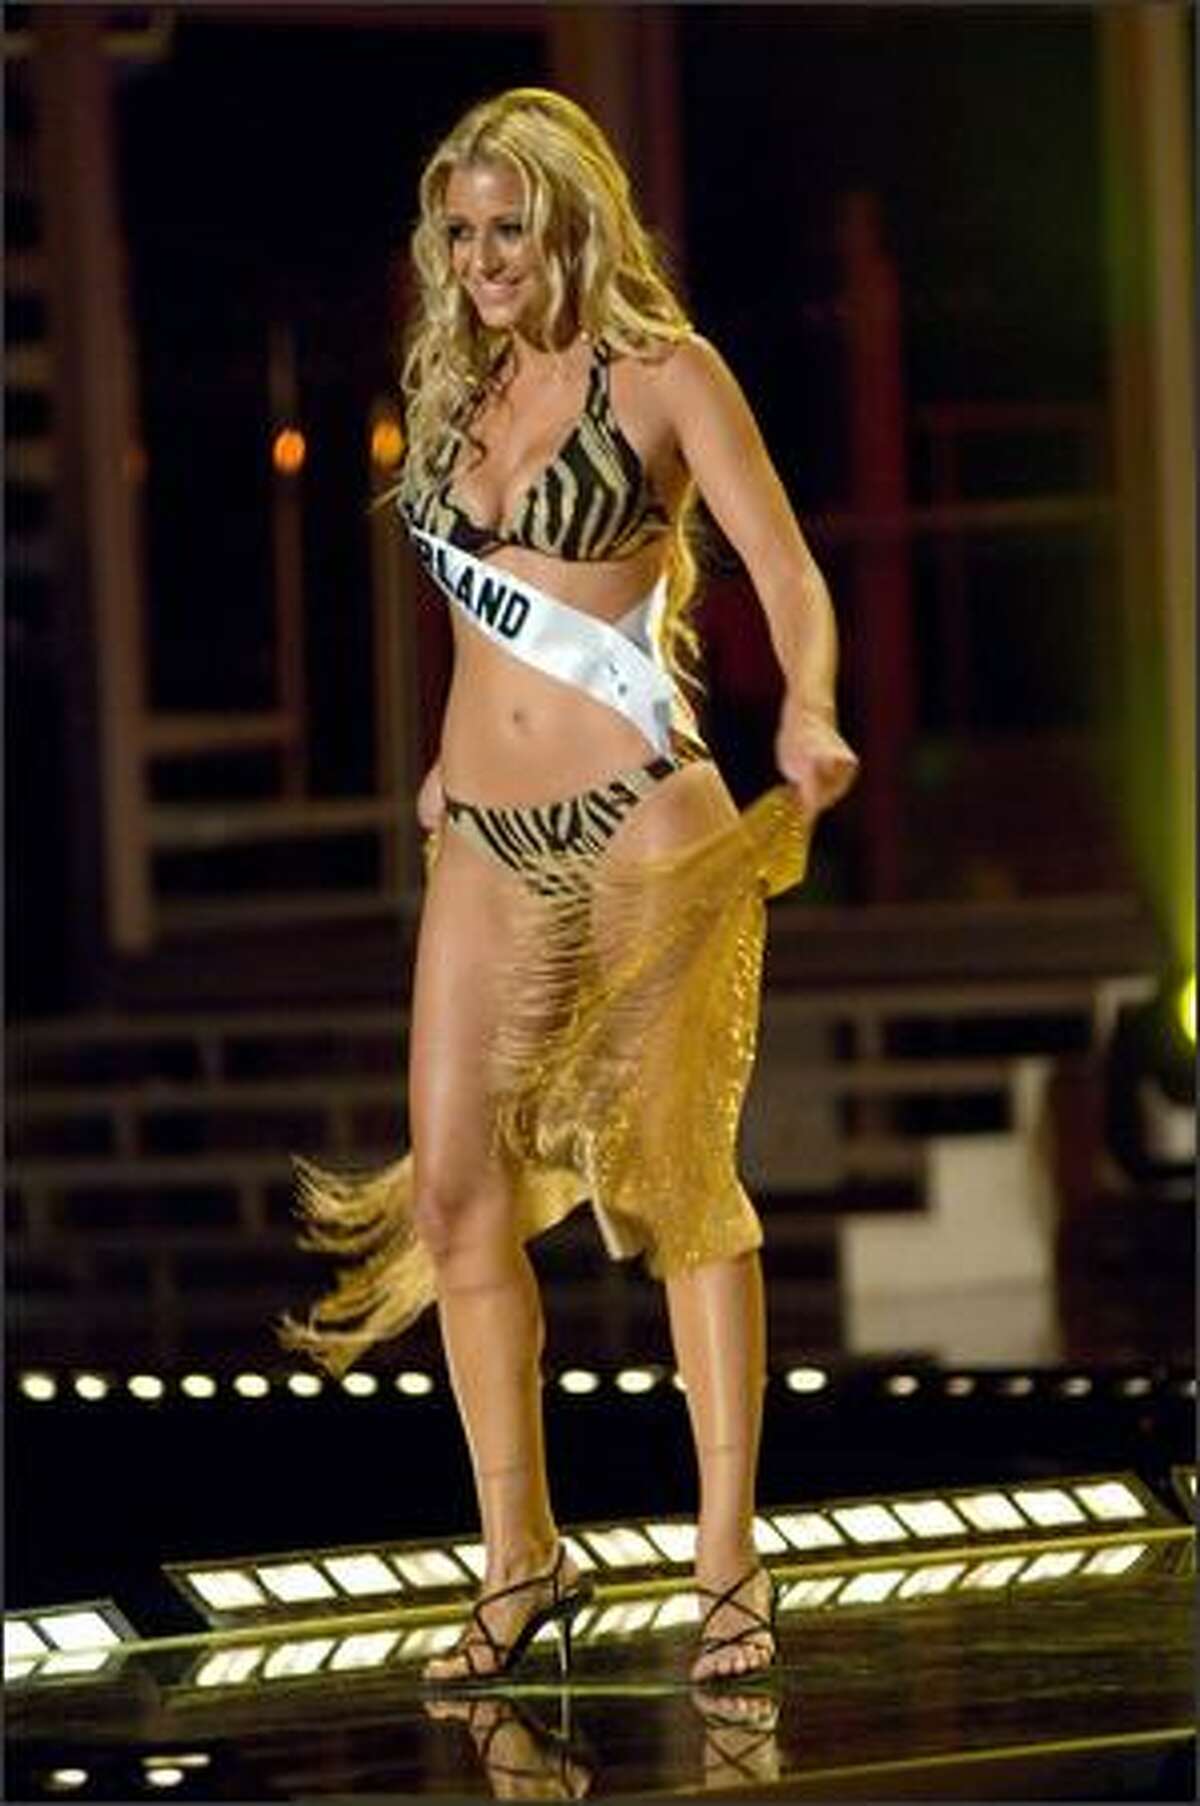 Christa Rigozzi, Miss Switzerland 2007.